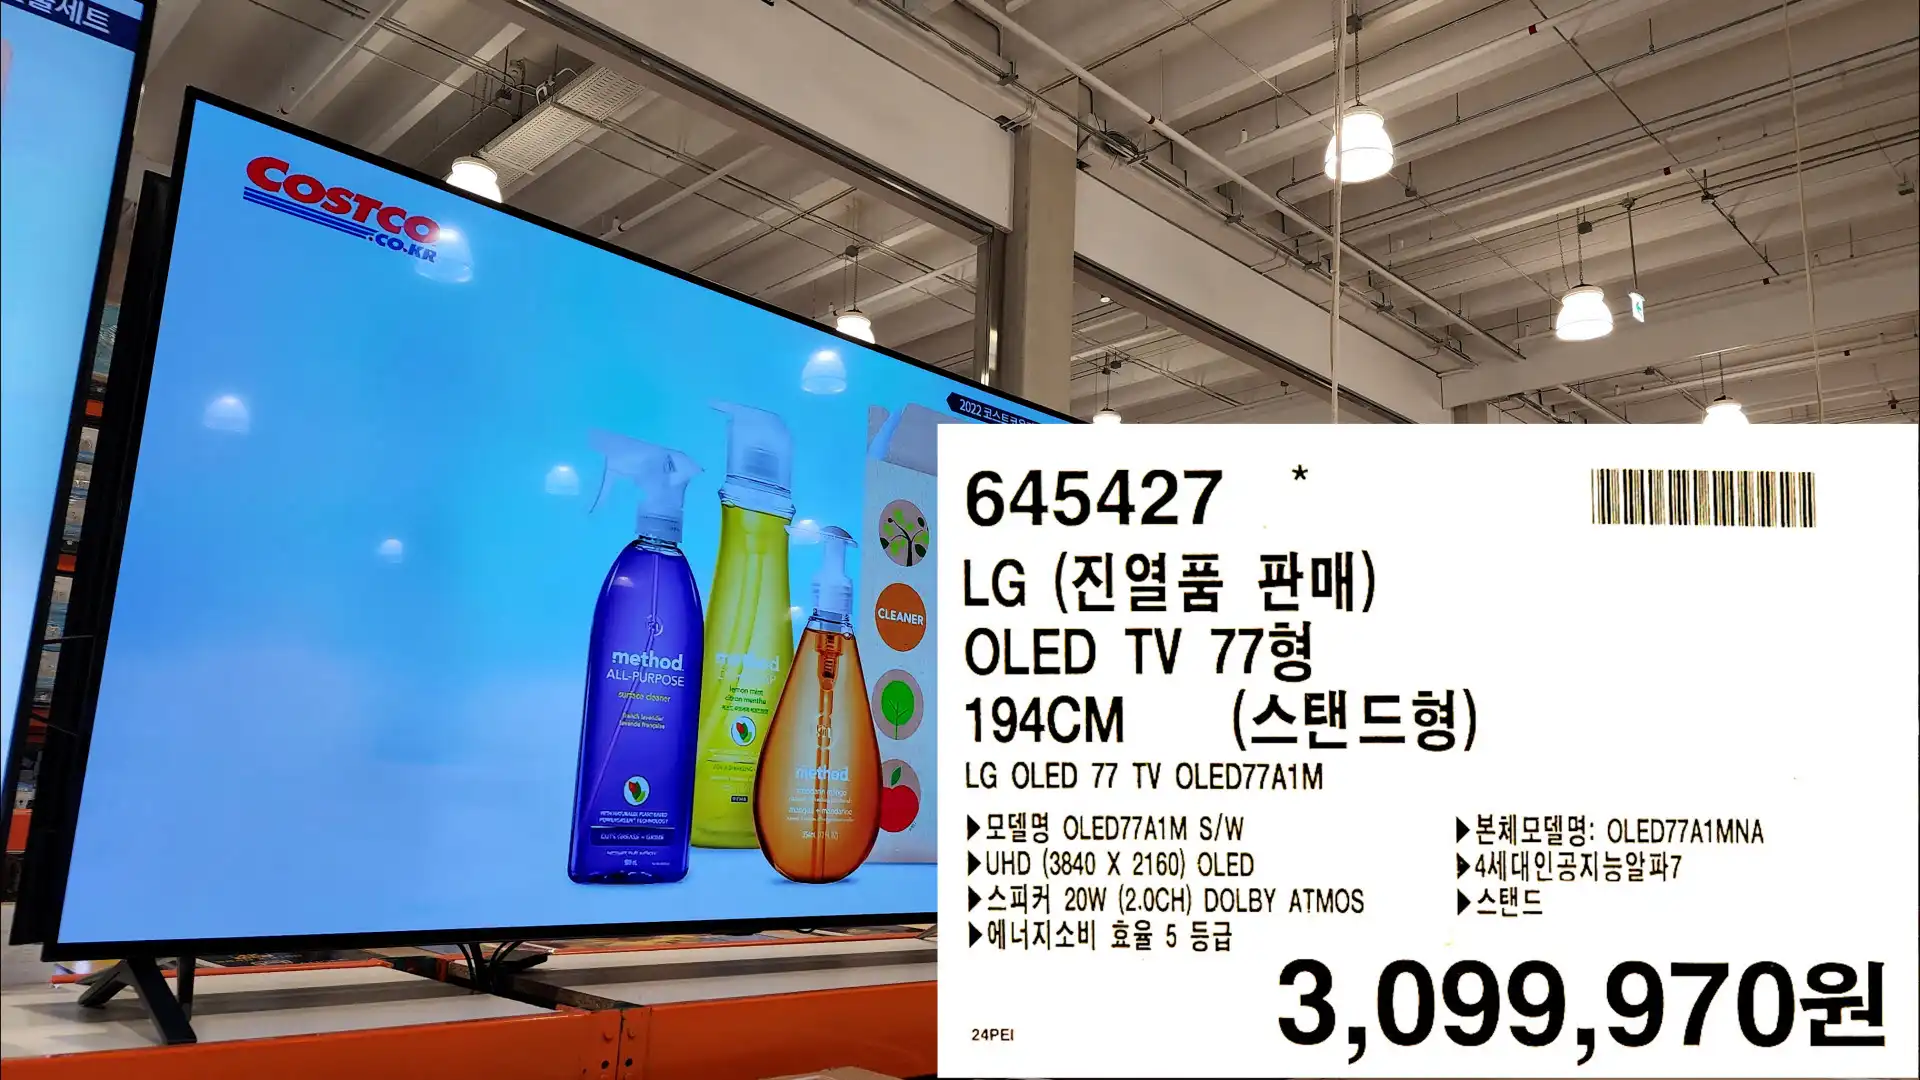 LG(진열품 판매)
OLED TV 77
194CM
LG OLED 77 TV OLED77A1M
(스탠드형)
▶모델명 OLED77A1M S/W
▶UHD(3840x2160) OLED
▶스피커 20W (2.0CH) DOLBY ATMOS
▶에너지소비 효율 5등급
▶본체모델명: OLED77A1MNA
▶4세대 인공지능알파7
▶스탠드
3&#44;099&#44;970원